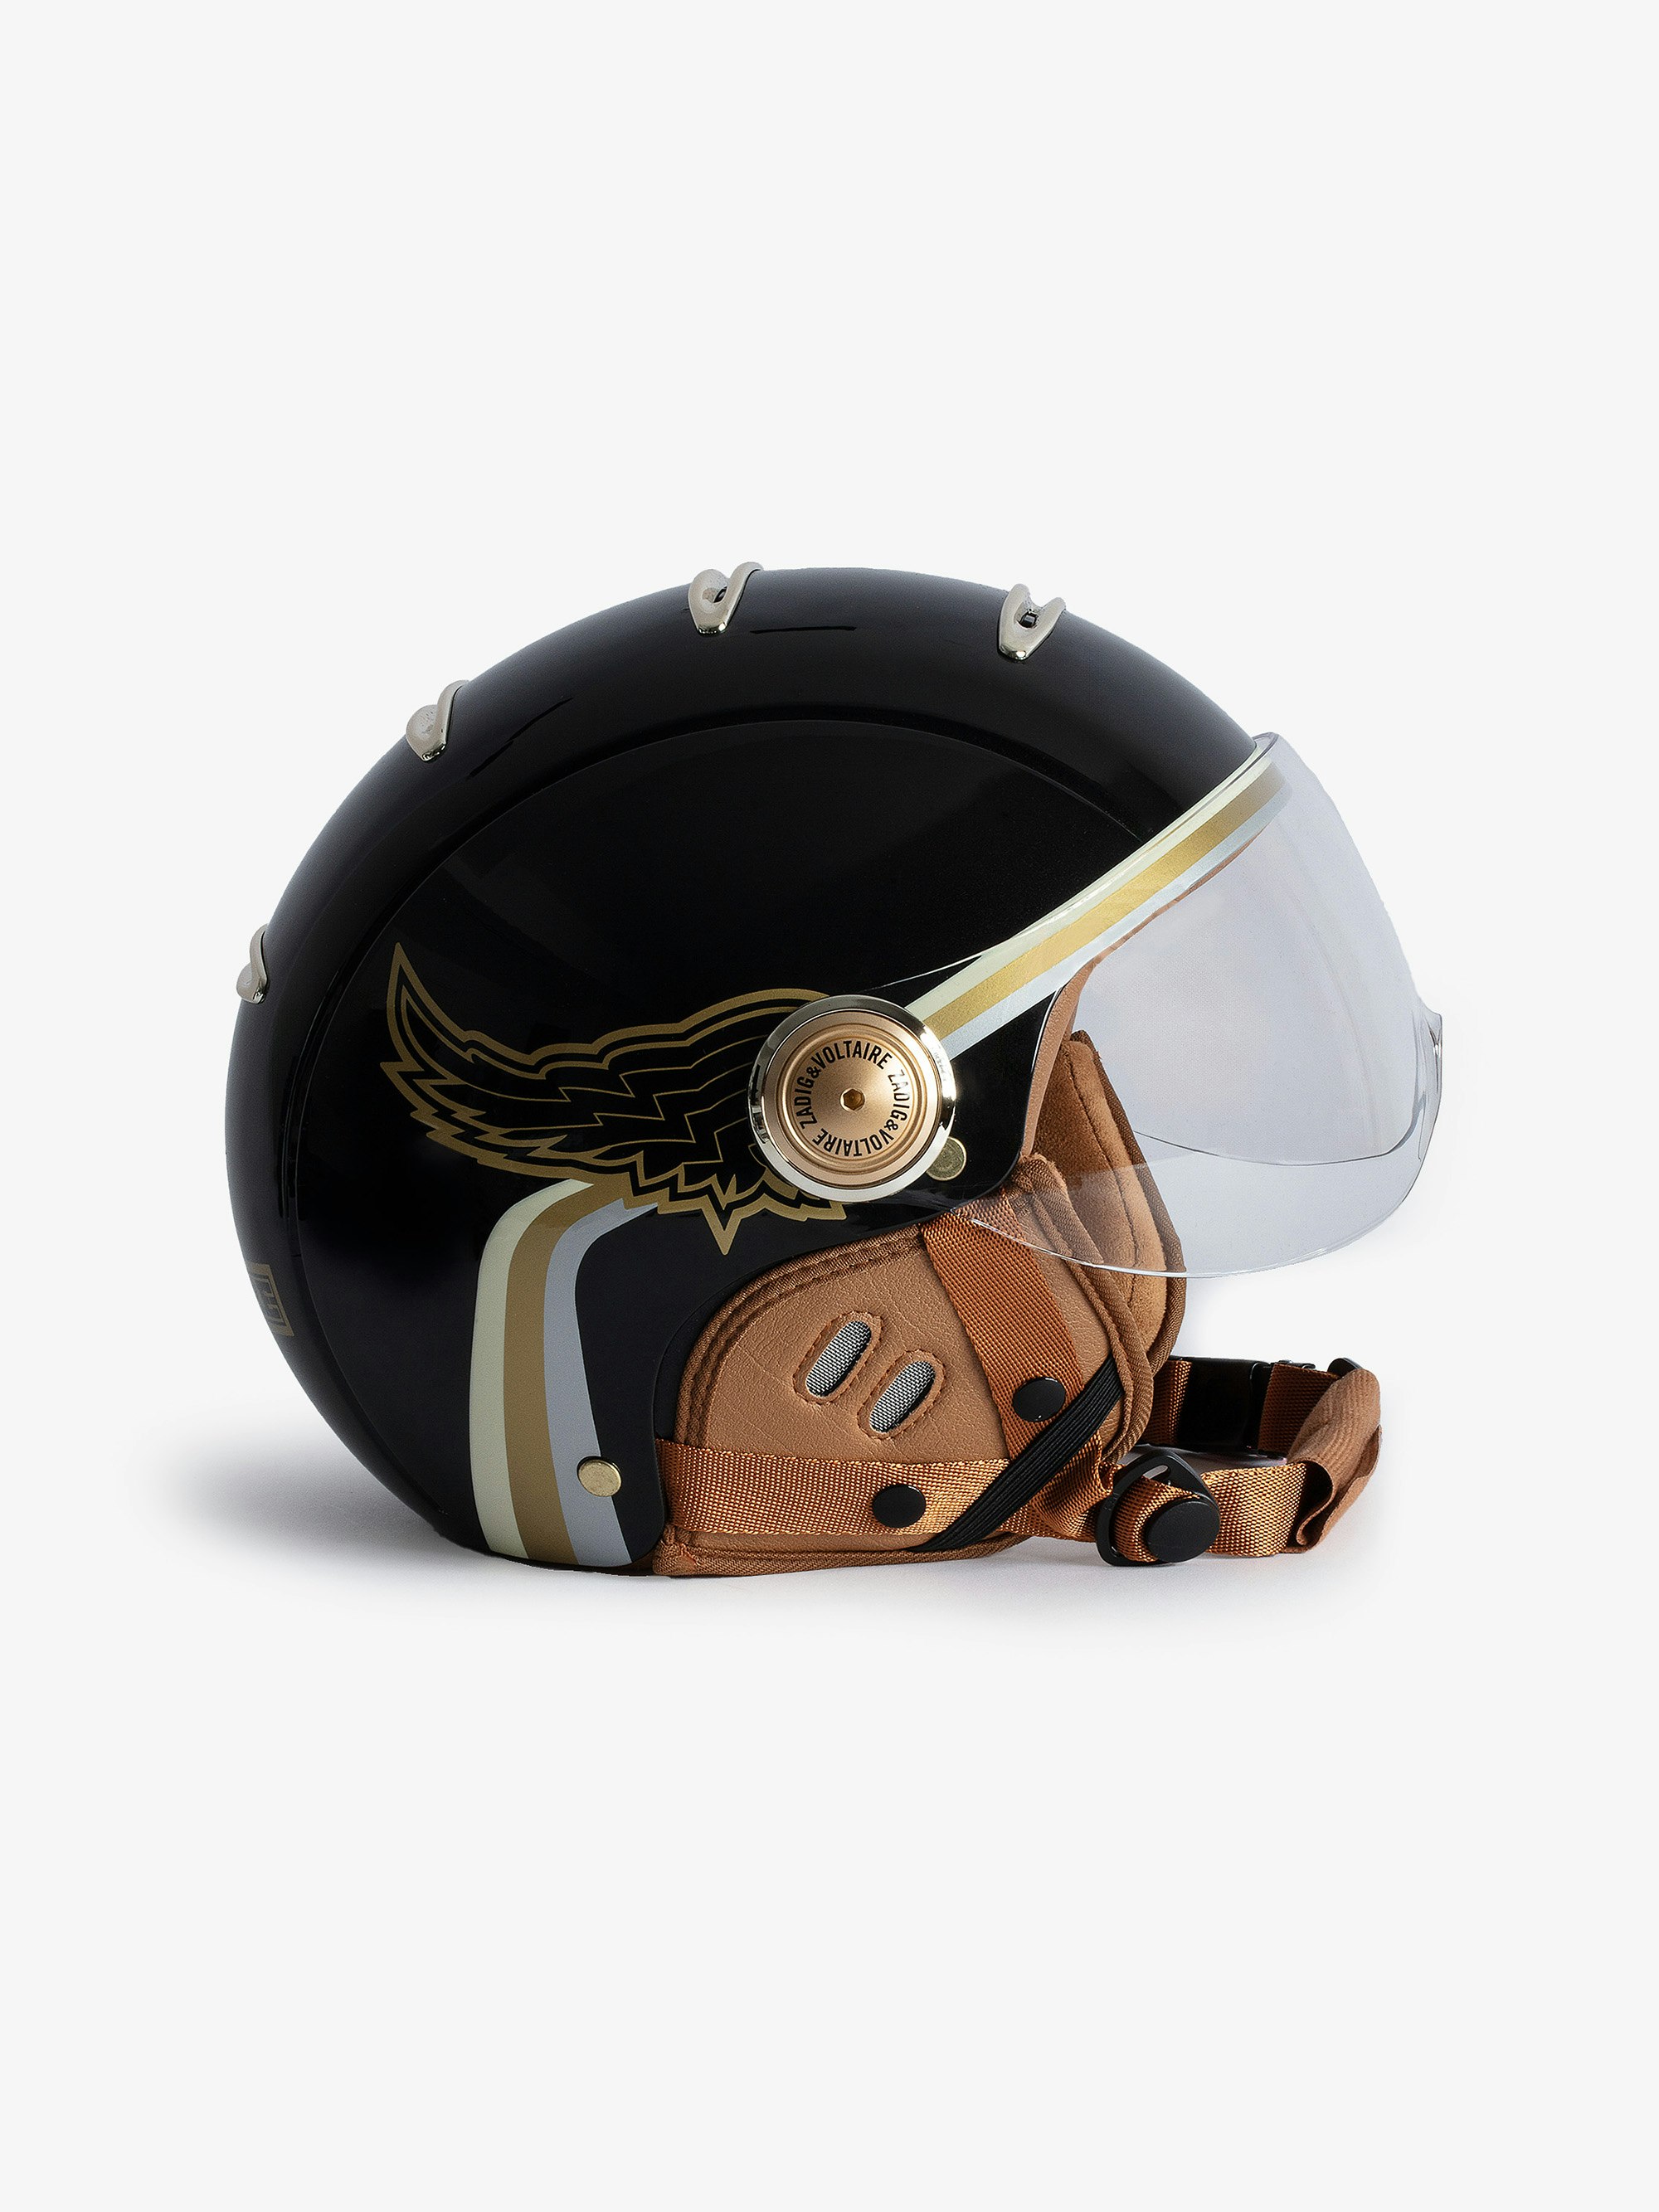 Wing Breaker Bike Helmet - Voltaire Vice x Mârkö Helmets black bicycle helmet with visor and adjustable buckle.